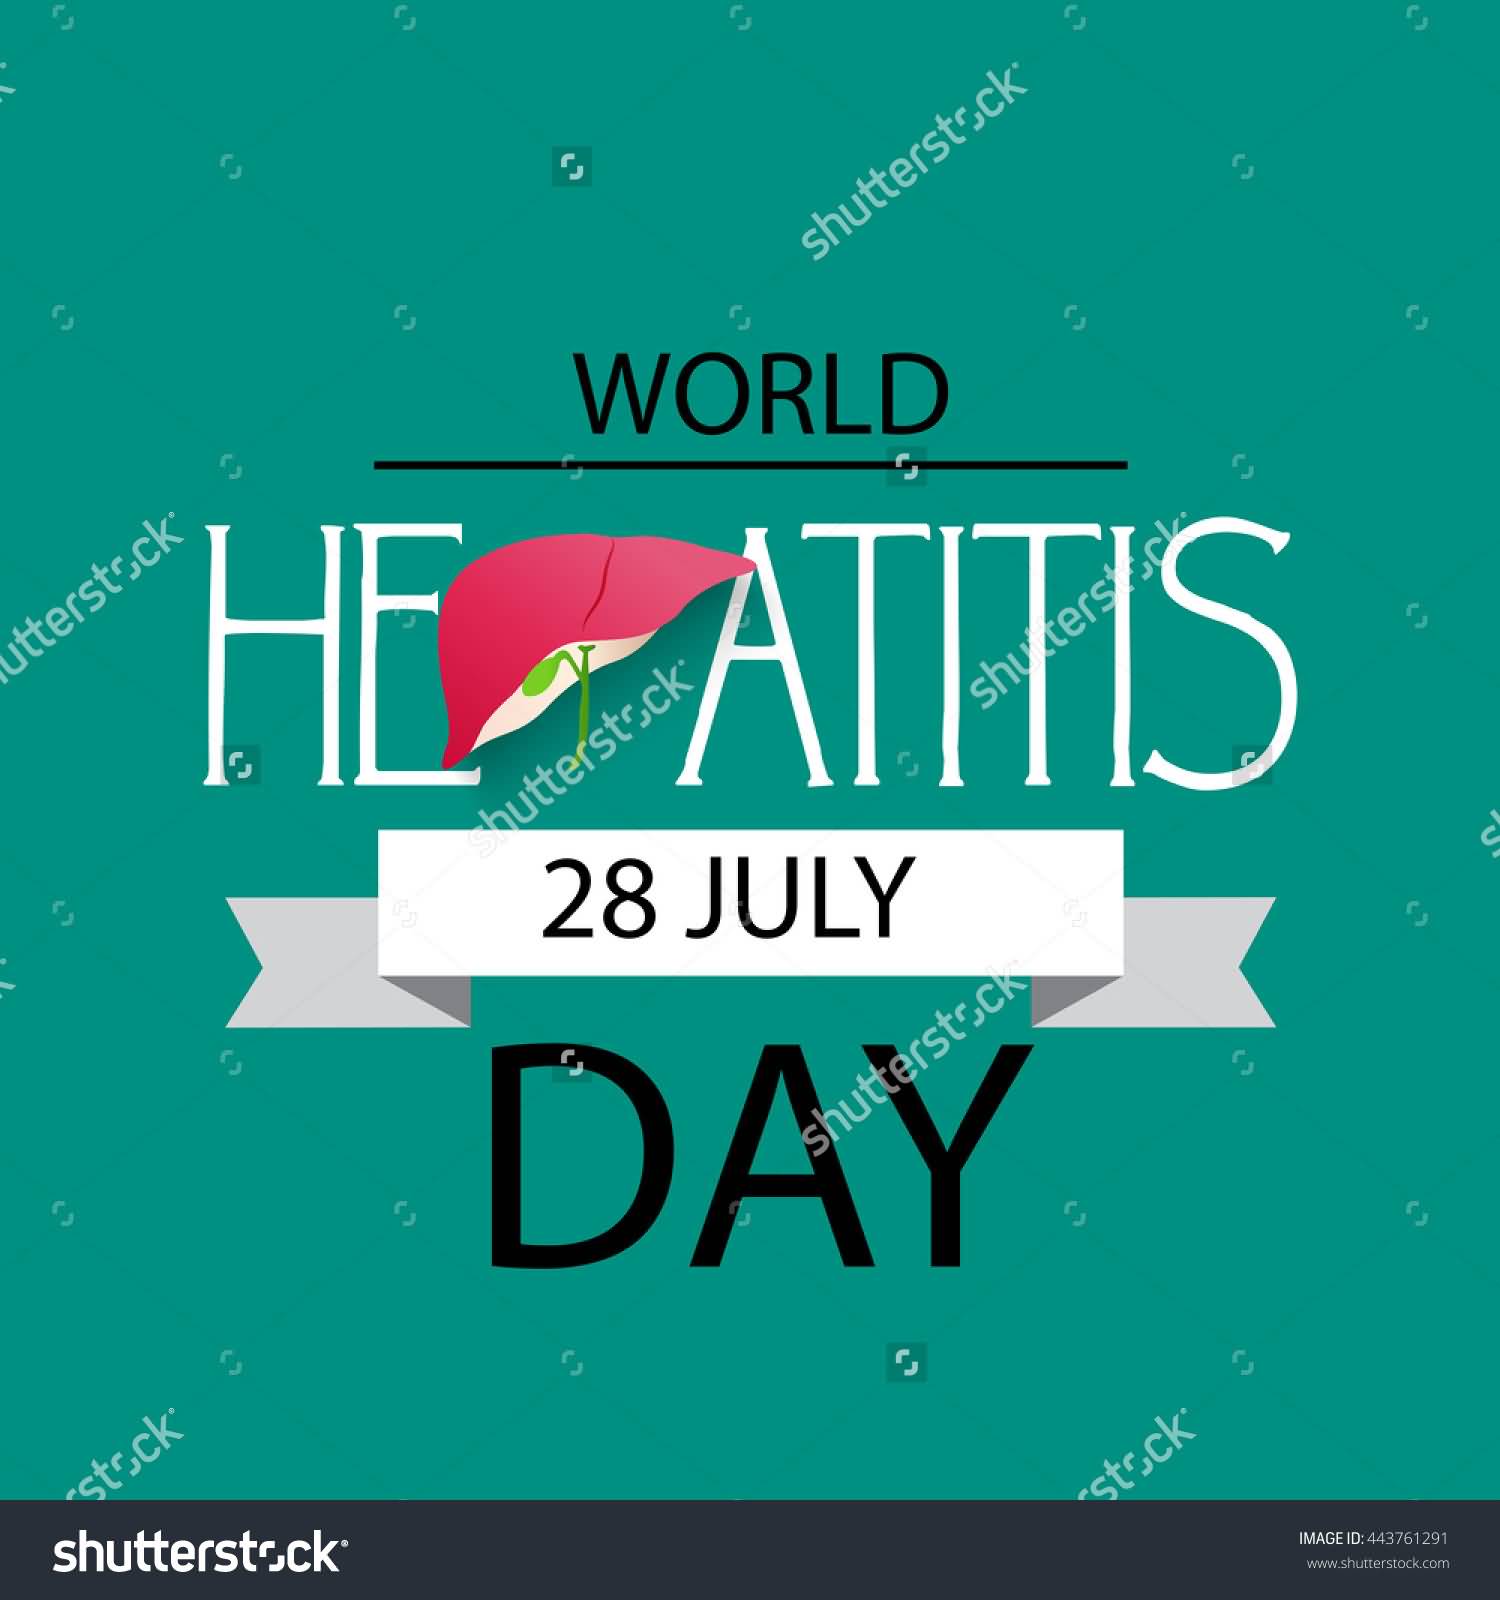 World Hepatitis Day 28 July Illustration